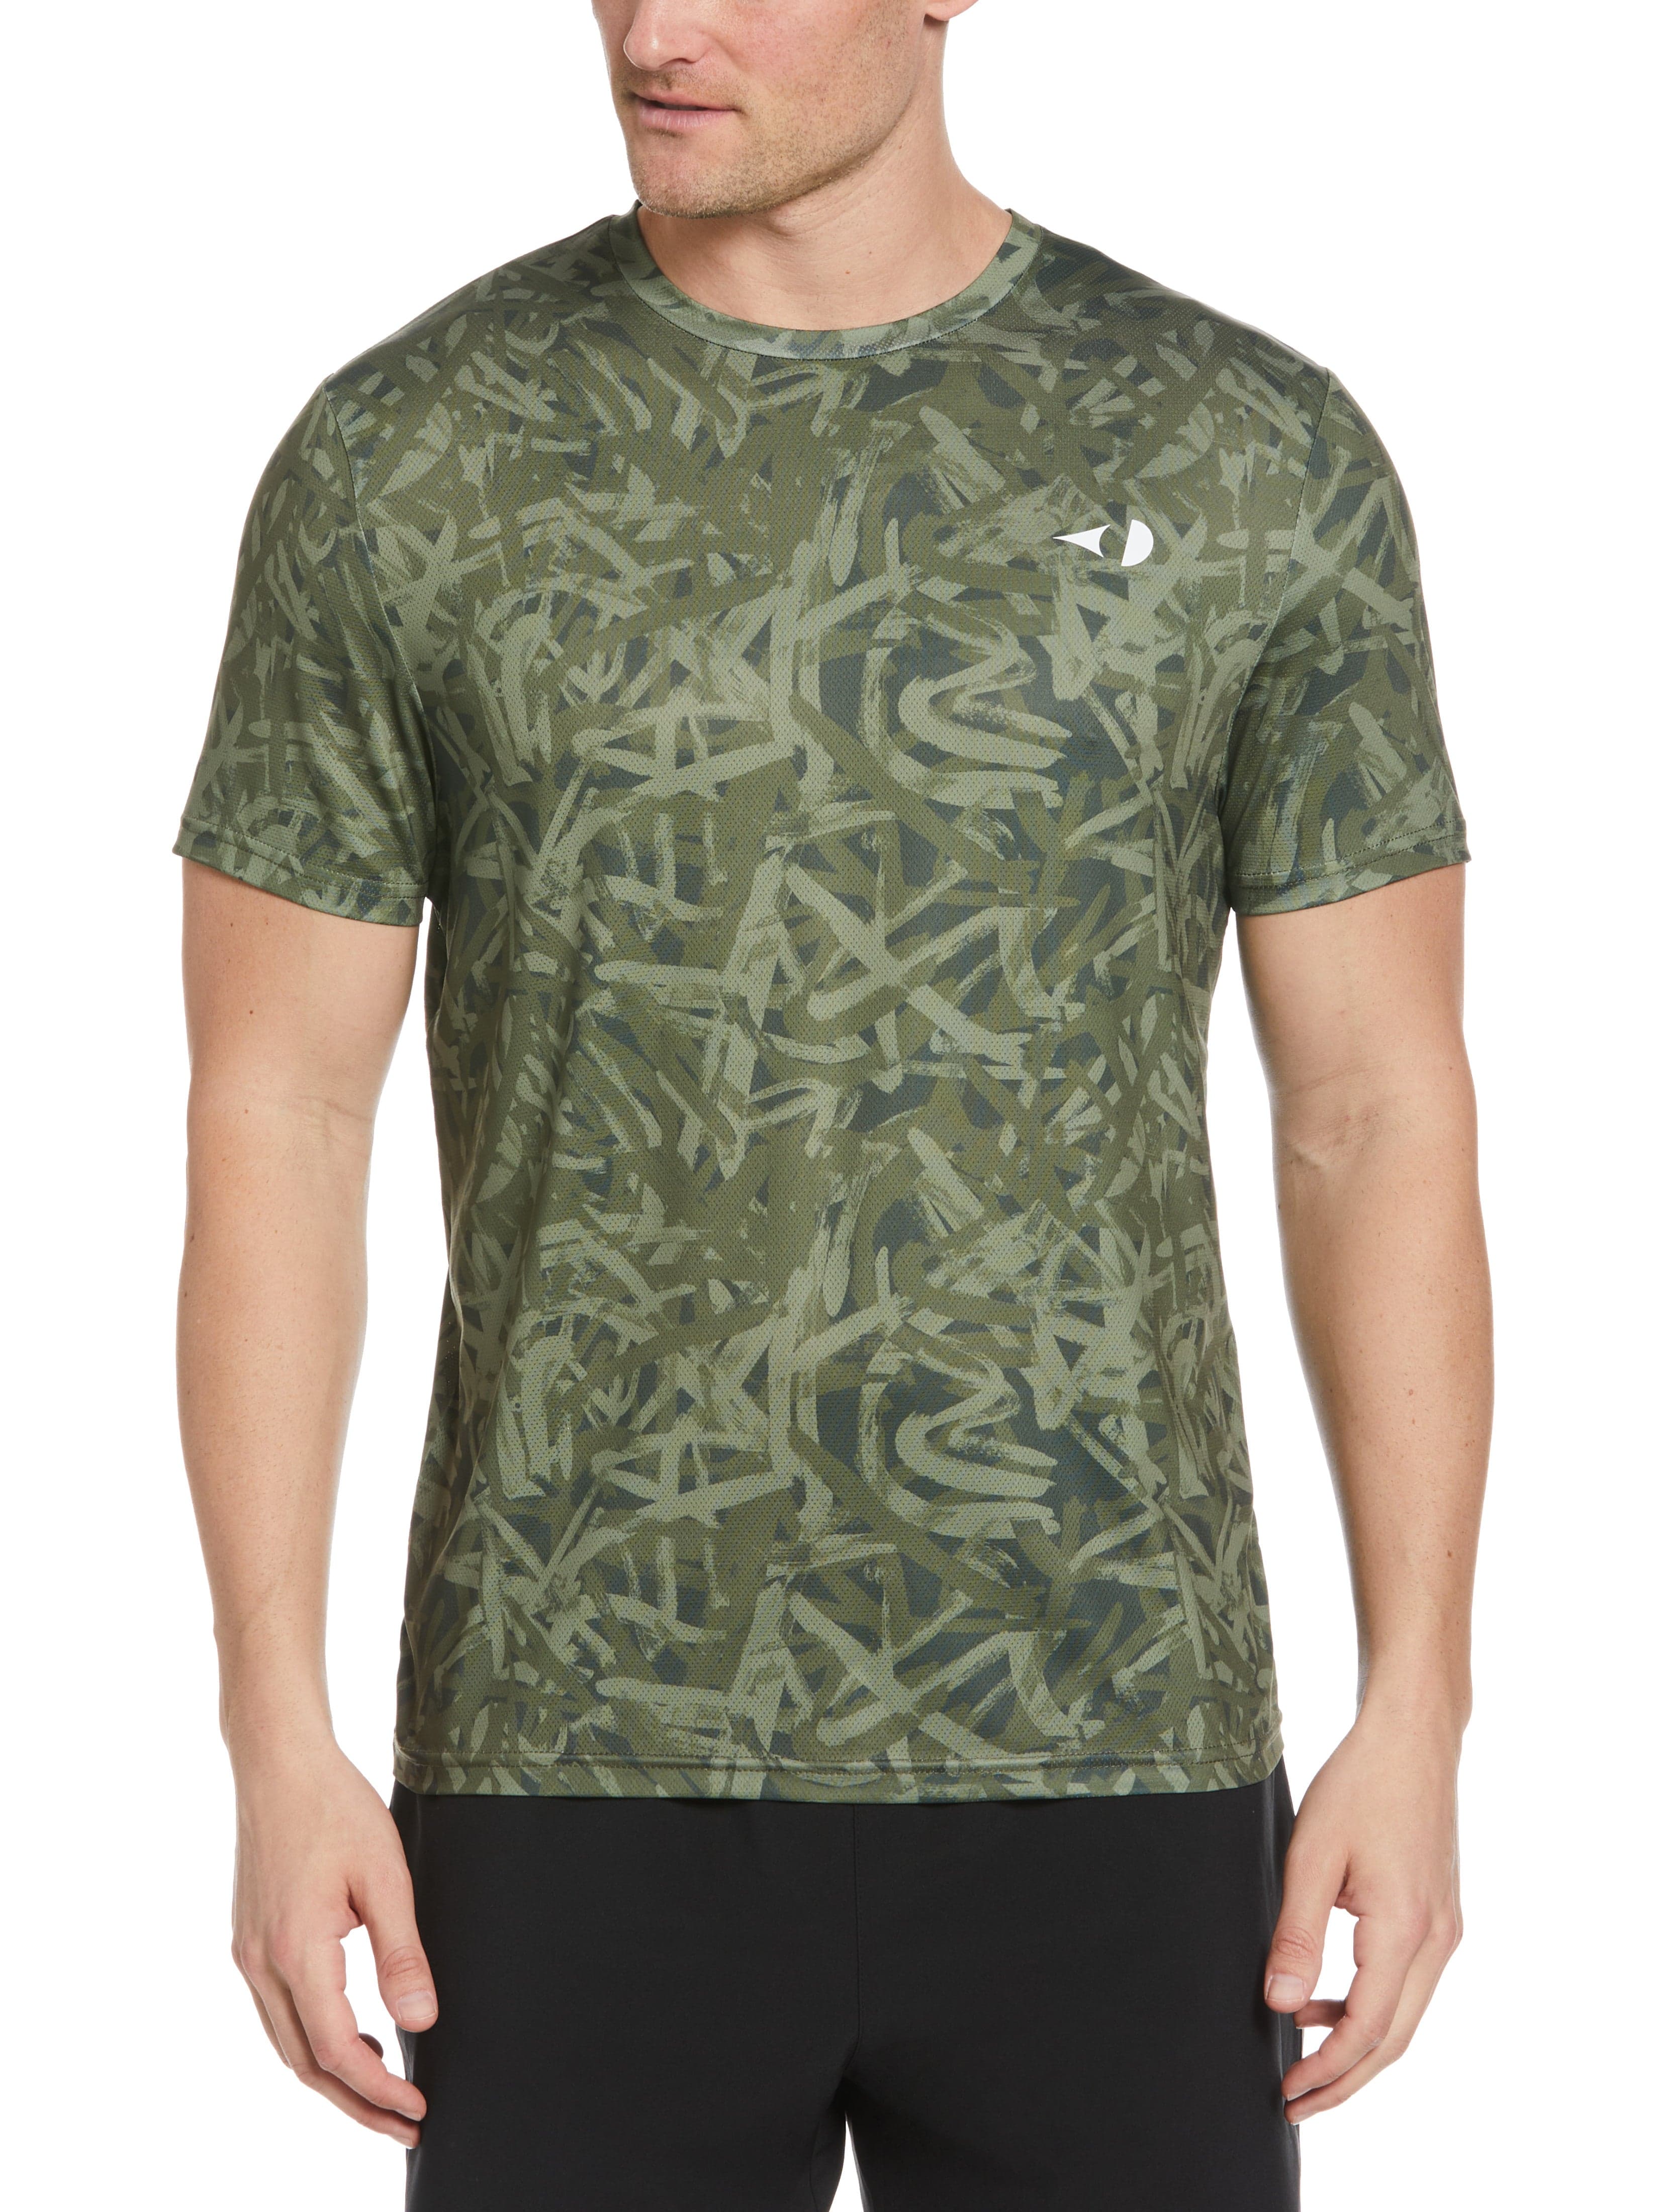 Grand Slam Mens Graffiti Print Tennis T-Shirt, Size Medium, Olivine Green, Polyester/Spandex | Golf Apparel Shop